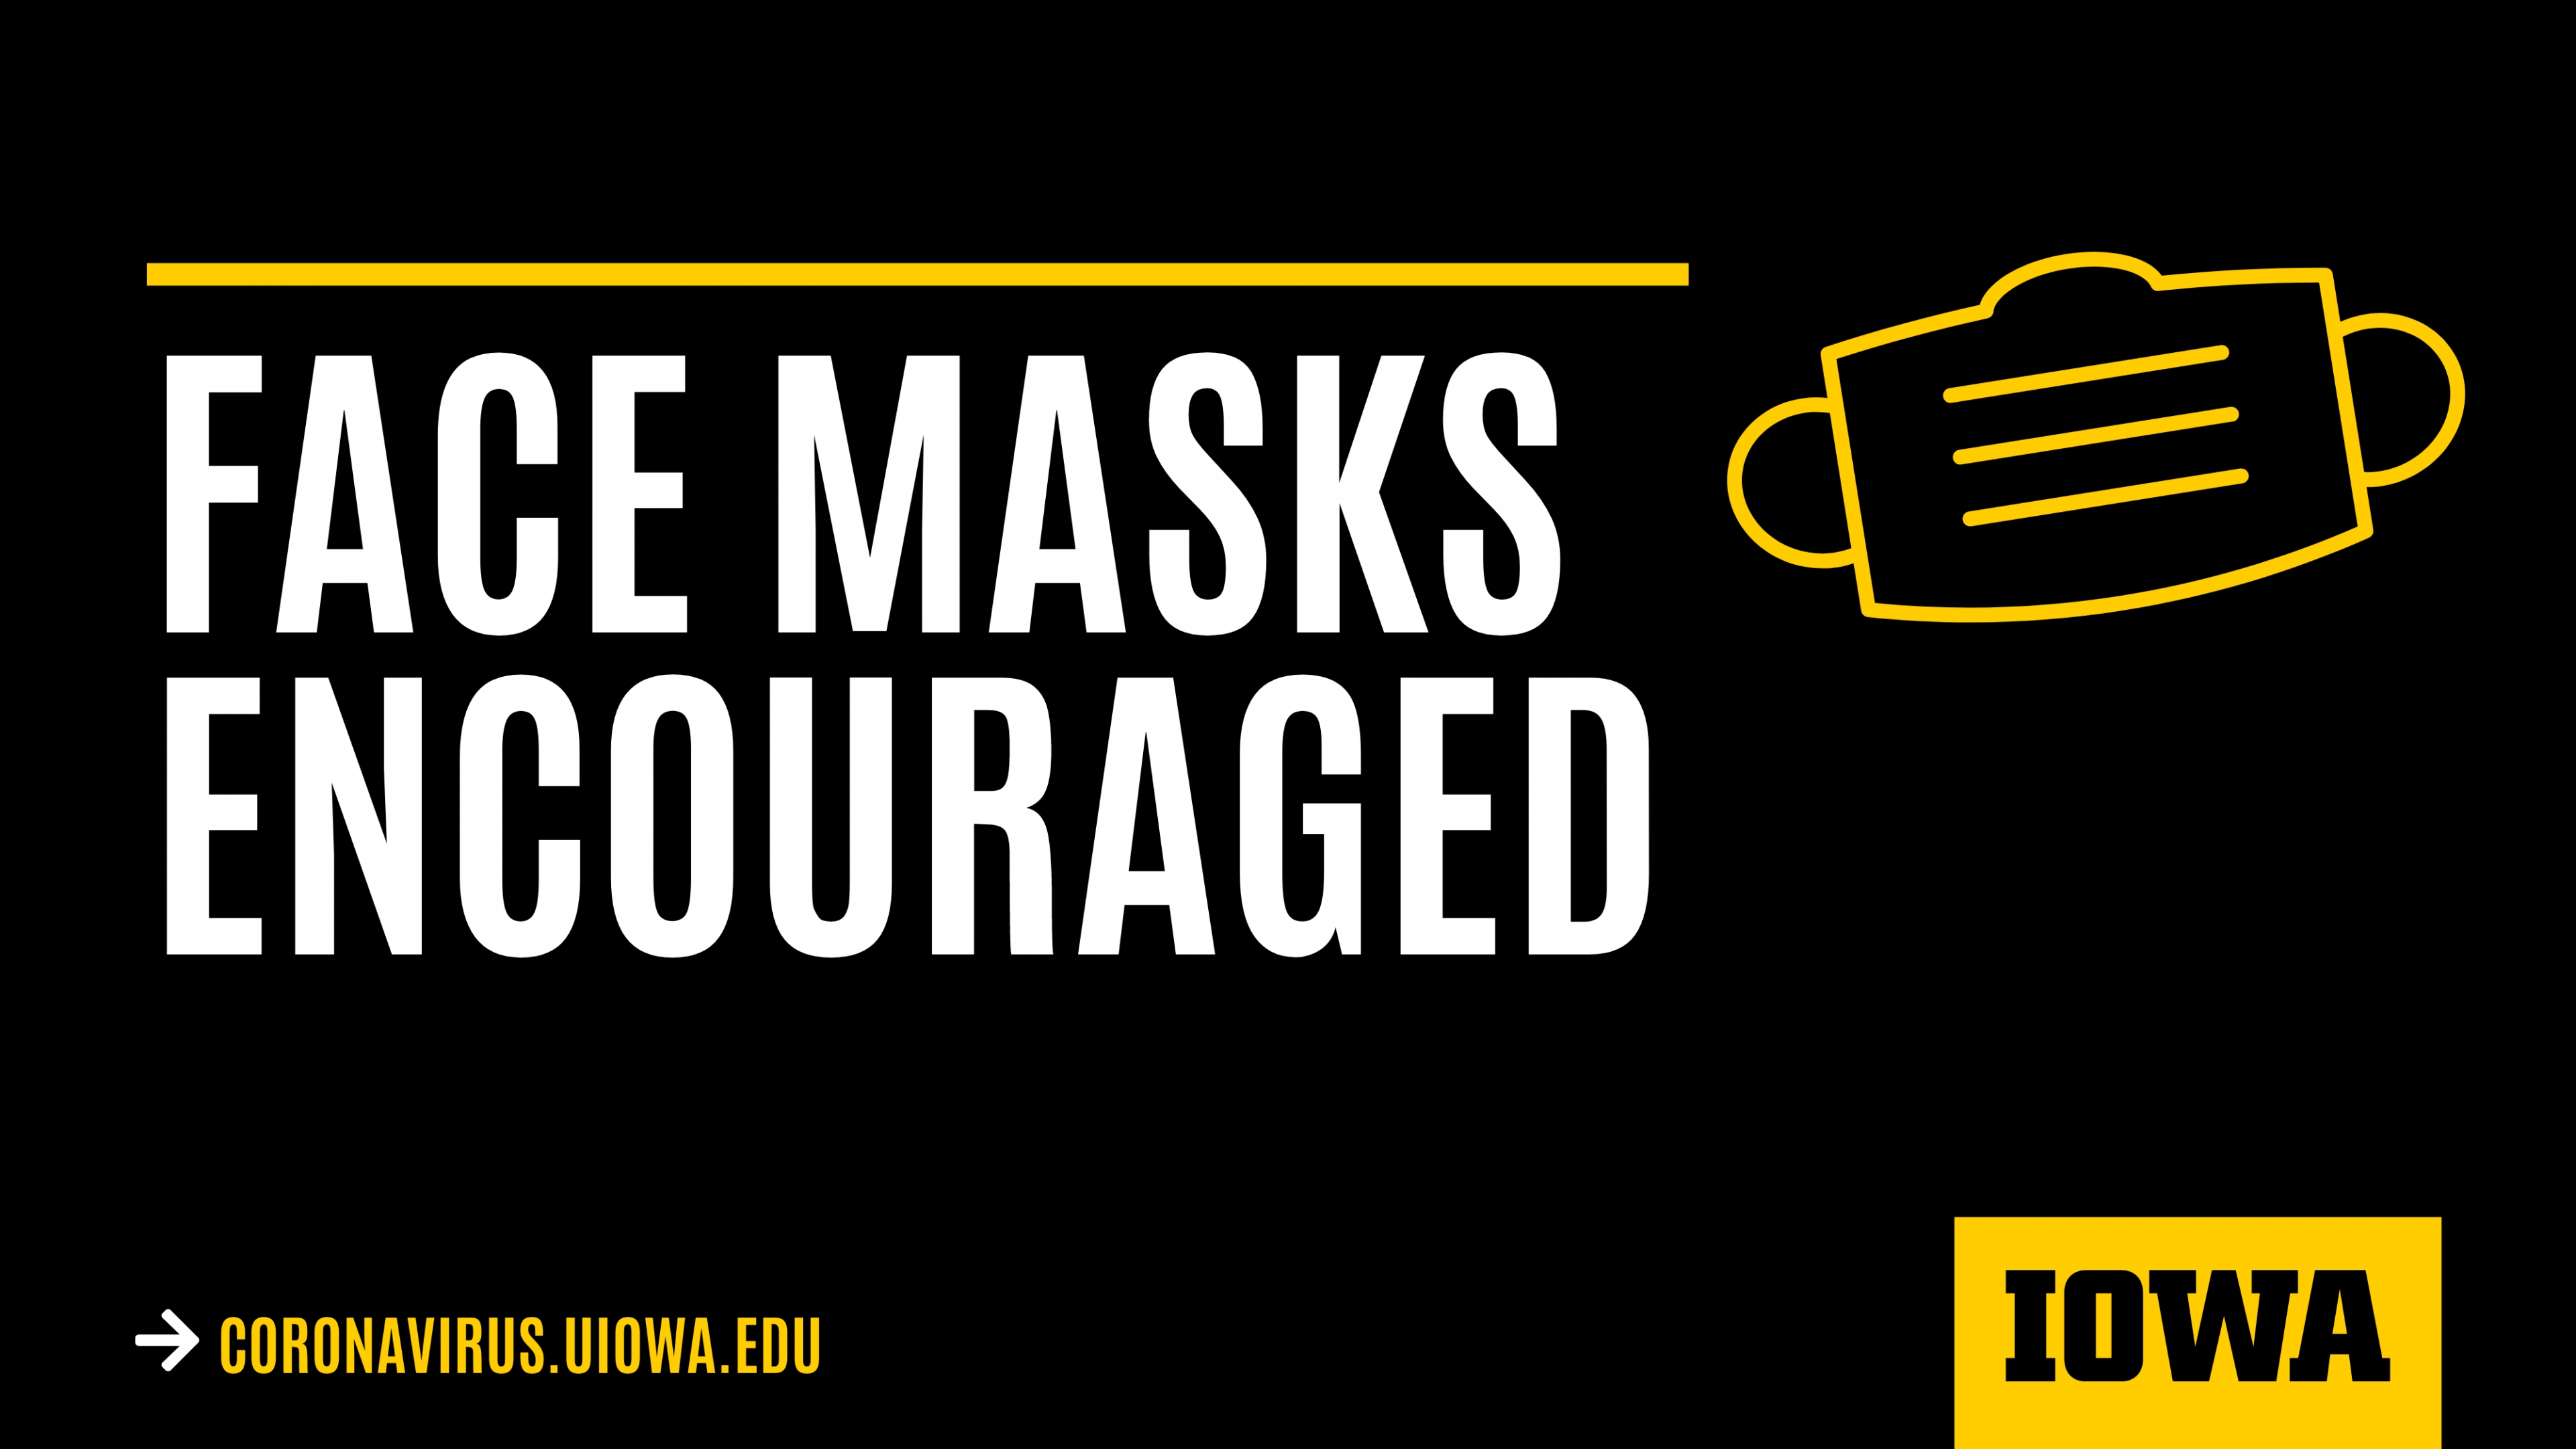 An image depicting a facemask, accompanied by the following text: "FACE MASKS ENCOURAGED. coronavirus.uiowa.edu"